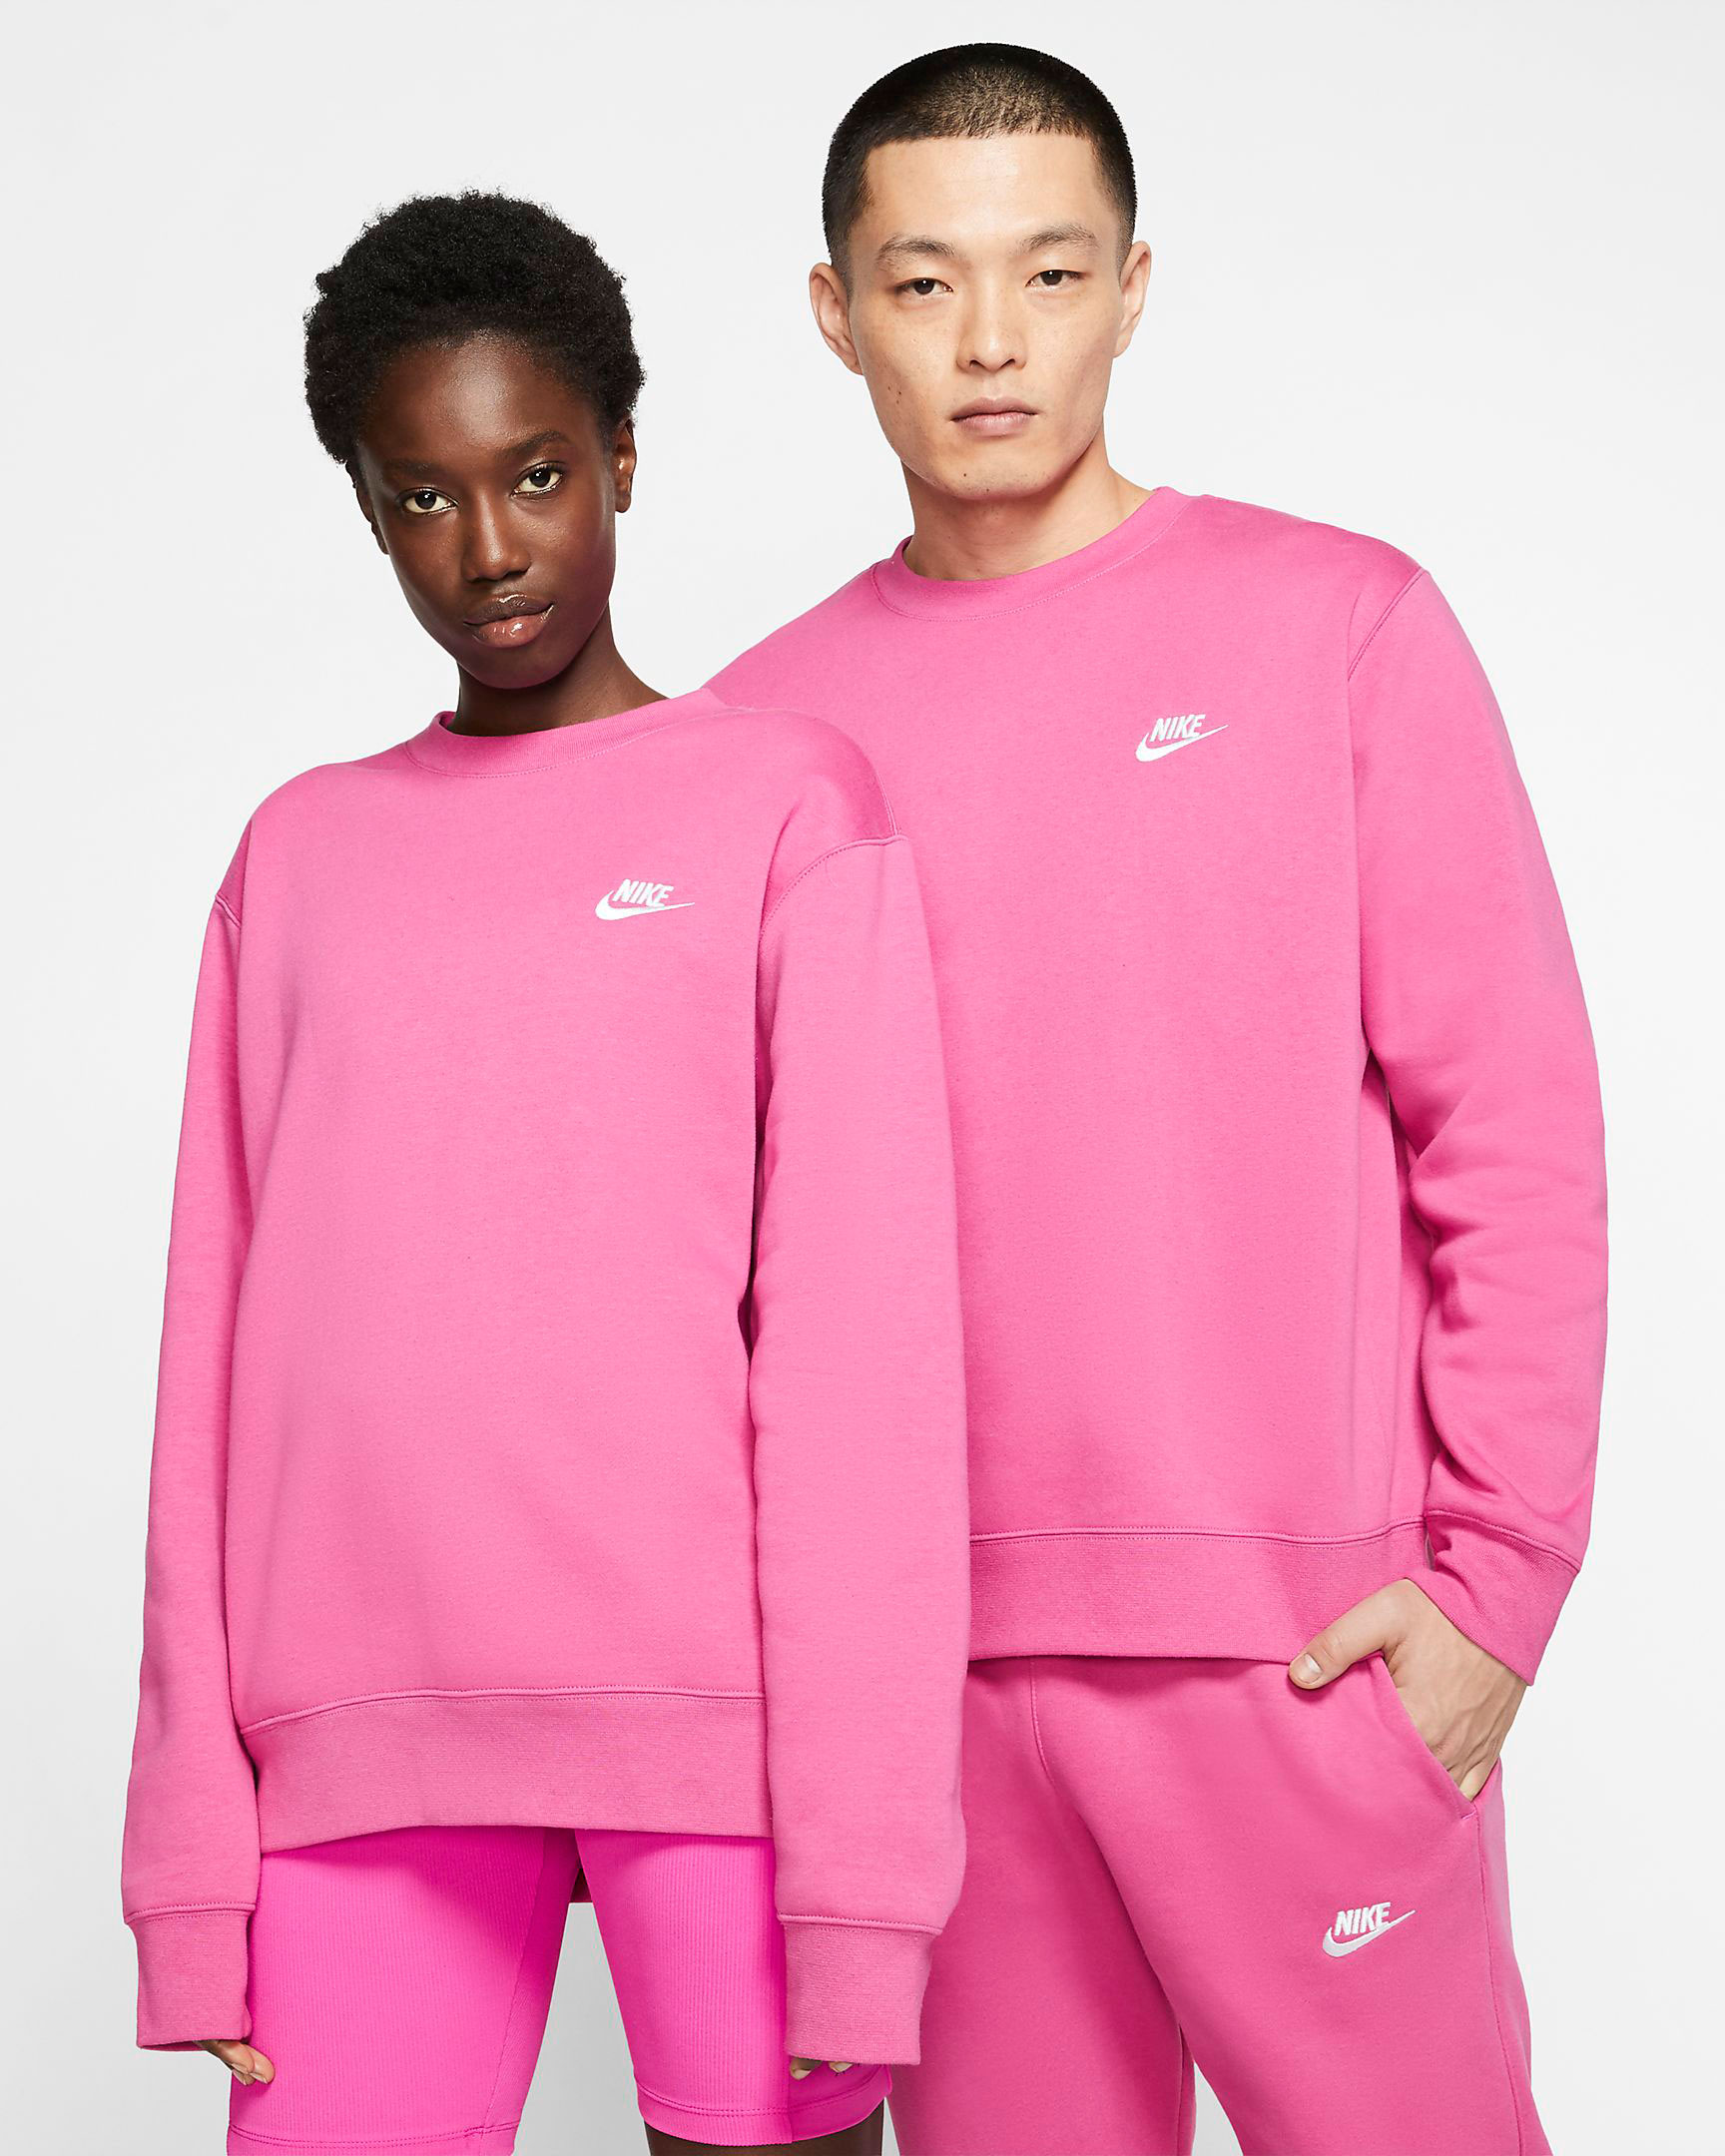 nike-sportswear-pink-fuschia-crew-sweatshirt